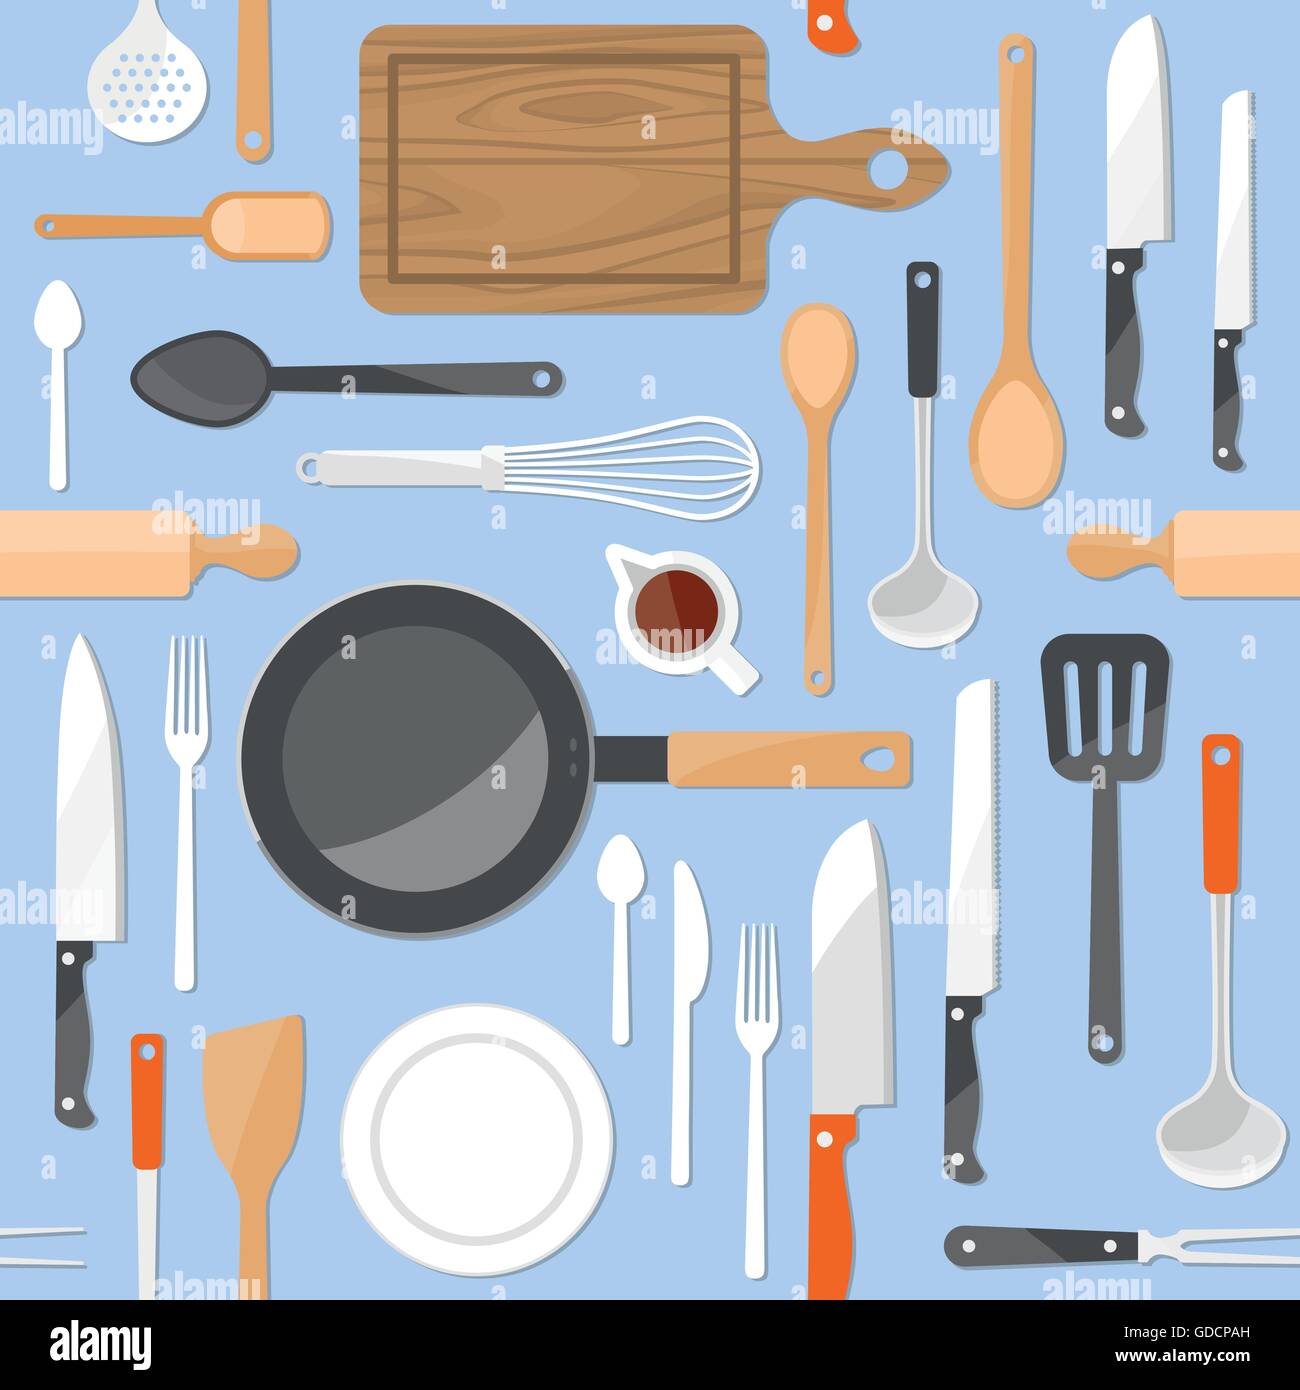 Smallwares: Cooking Tools & Supplies